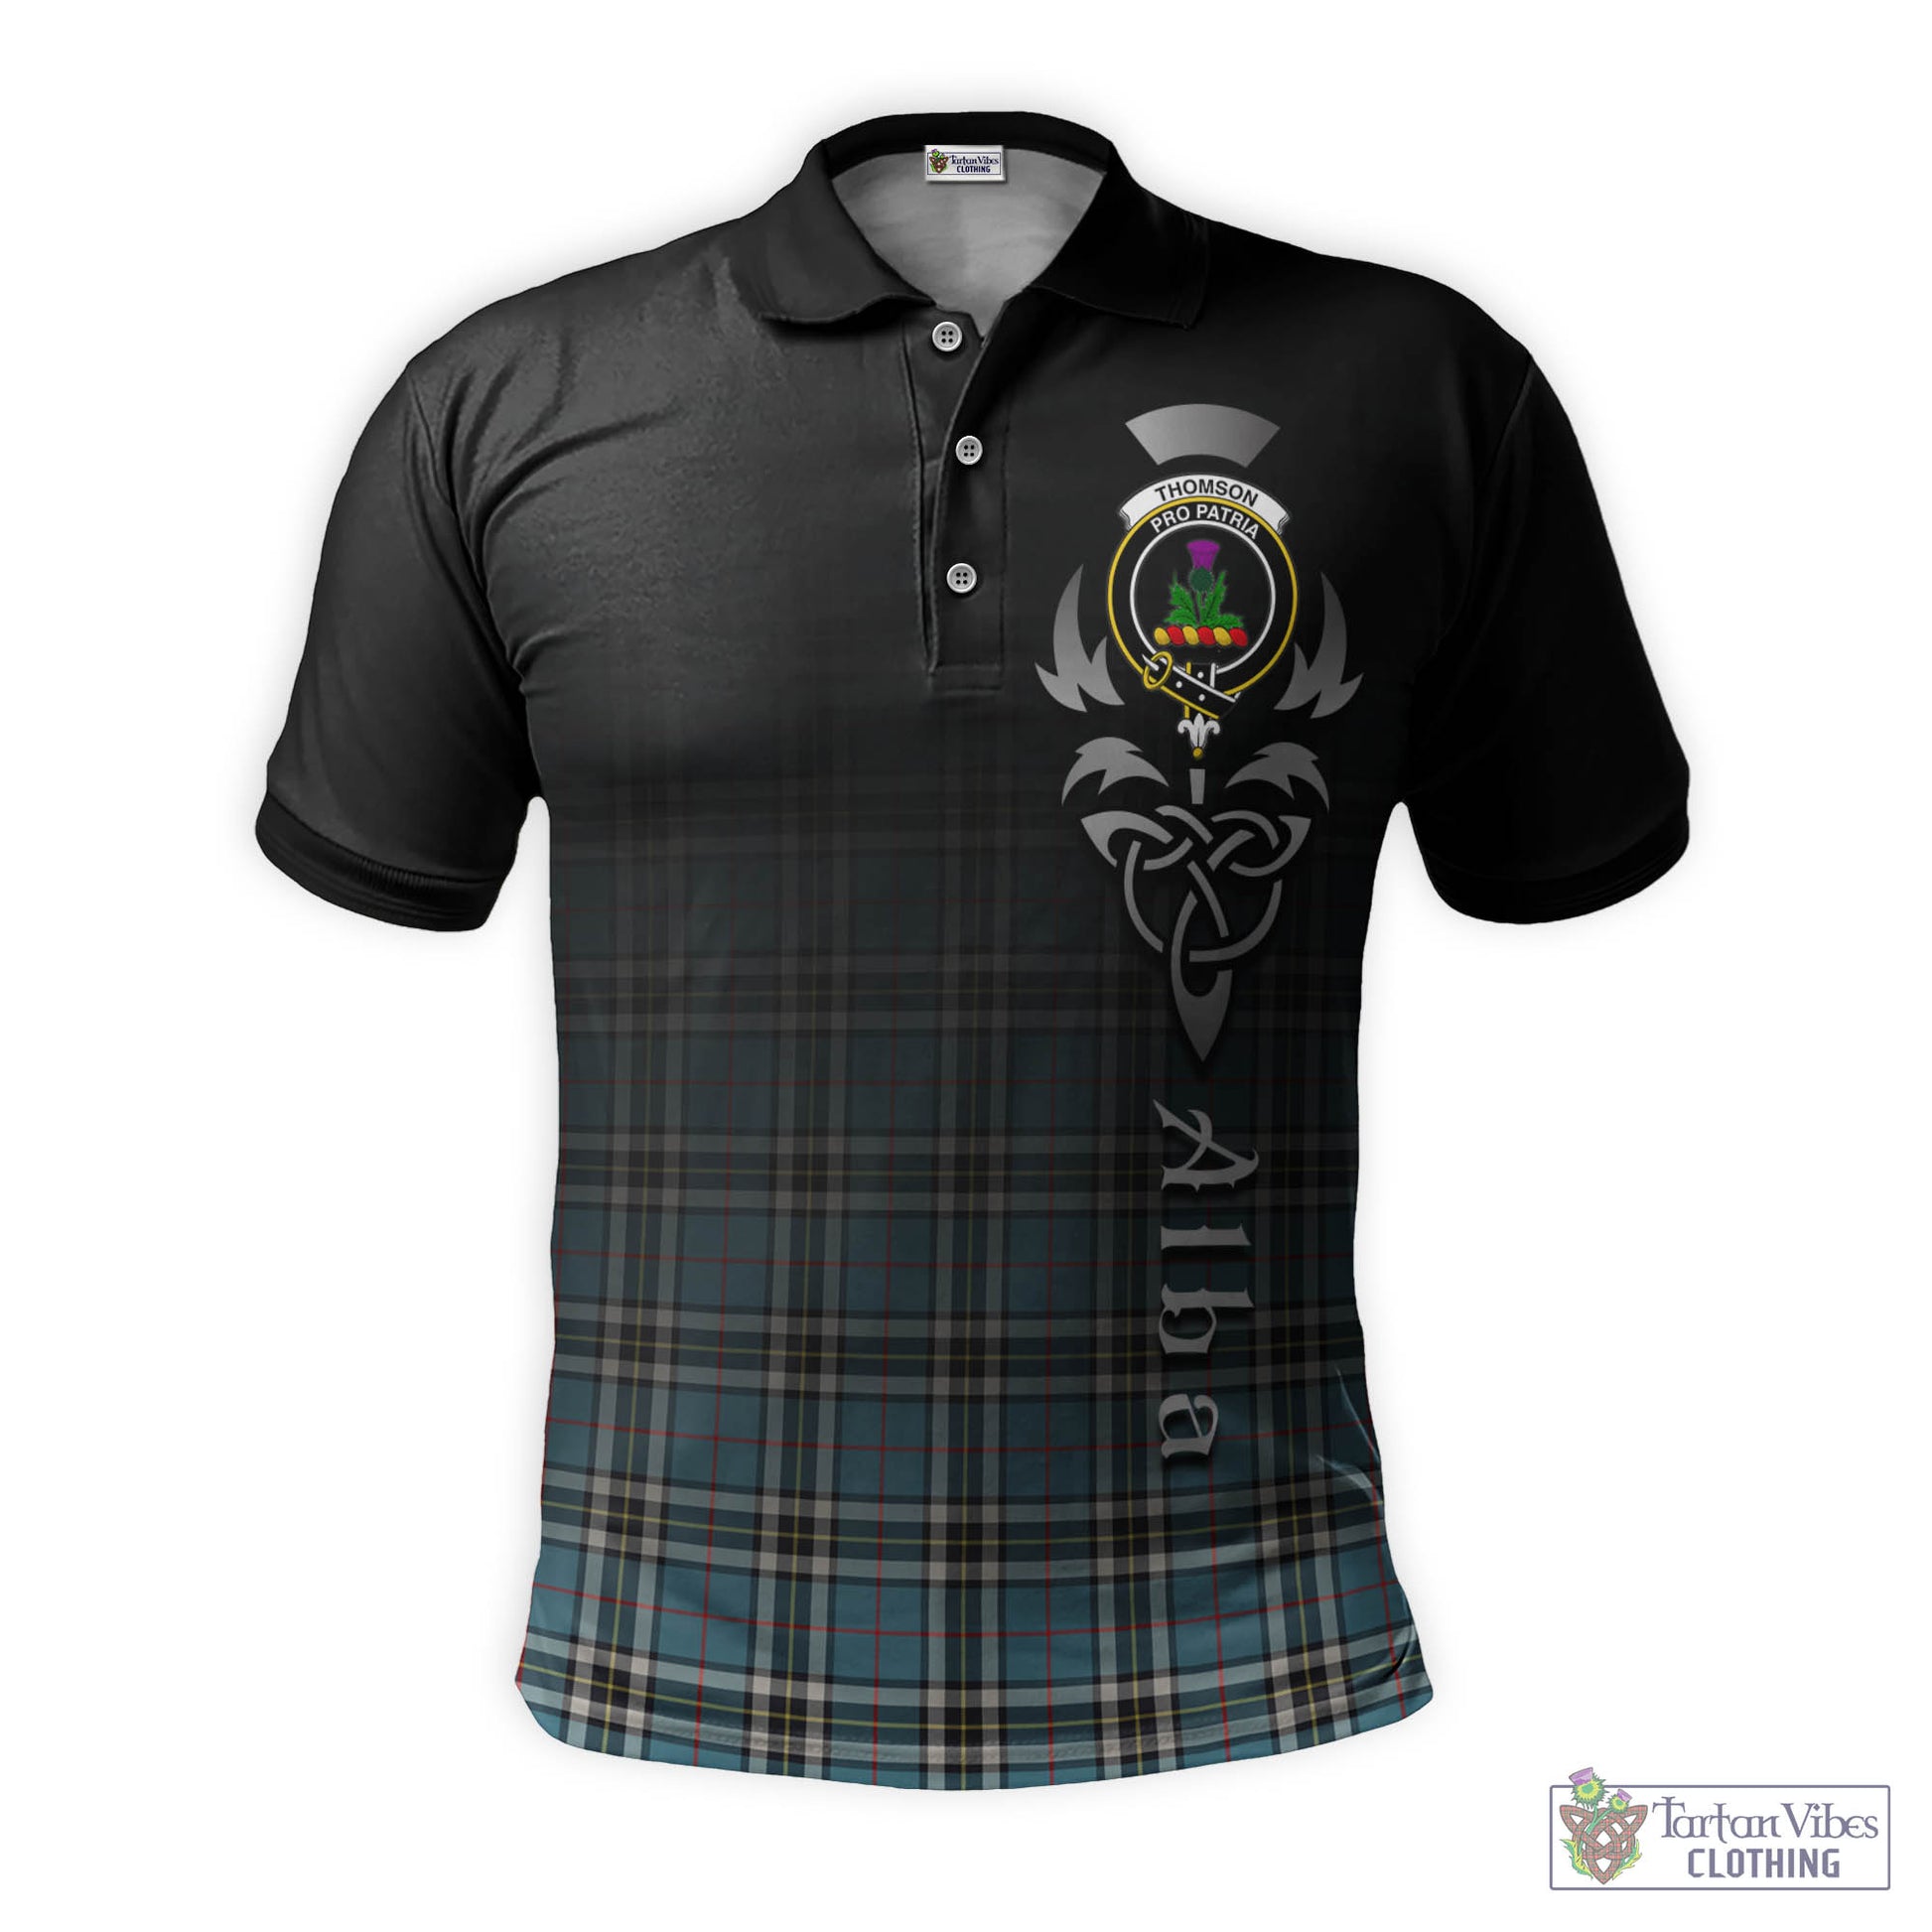 Tartan Vibes Clothing Thomson Tartan Polo Shirt Featuring Alba Gu Brath Family Crest Celtic Inspired